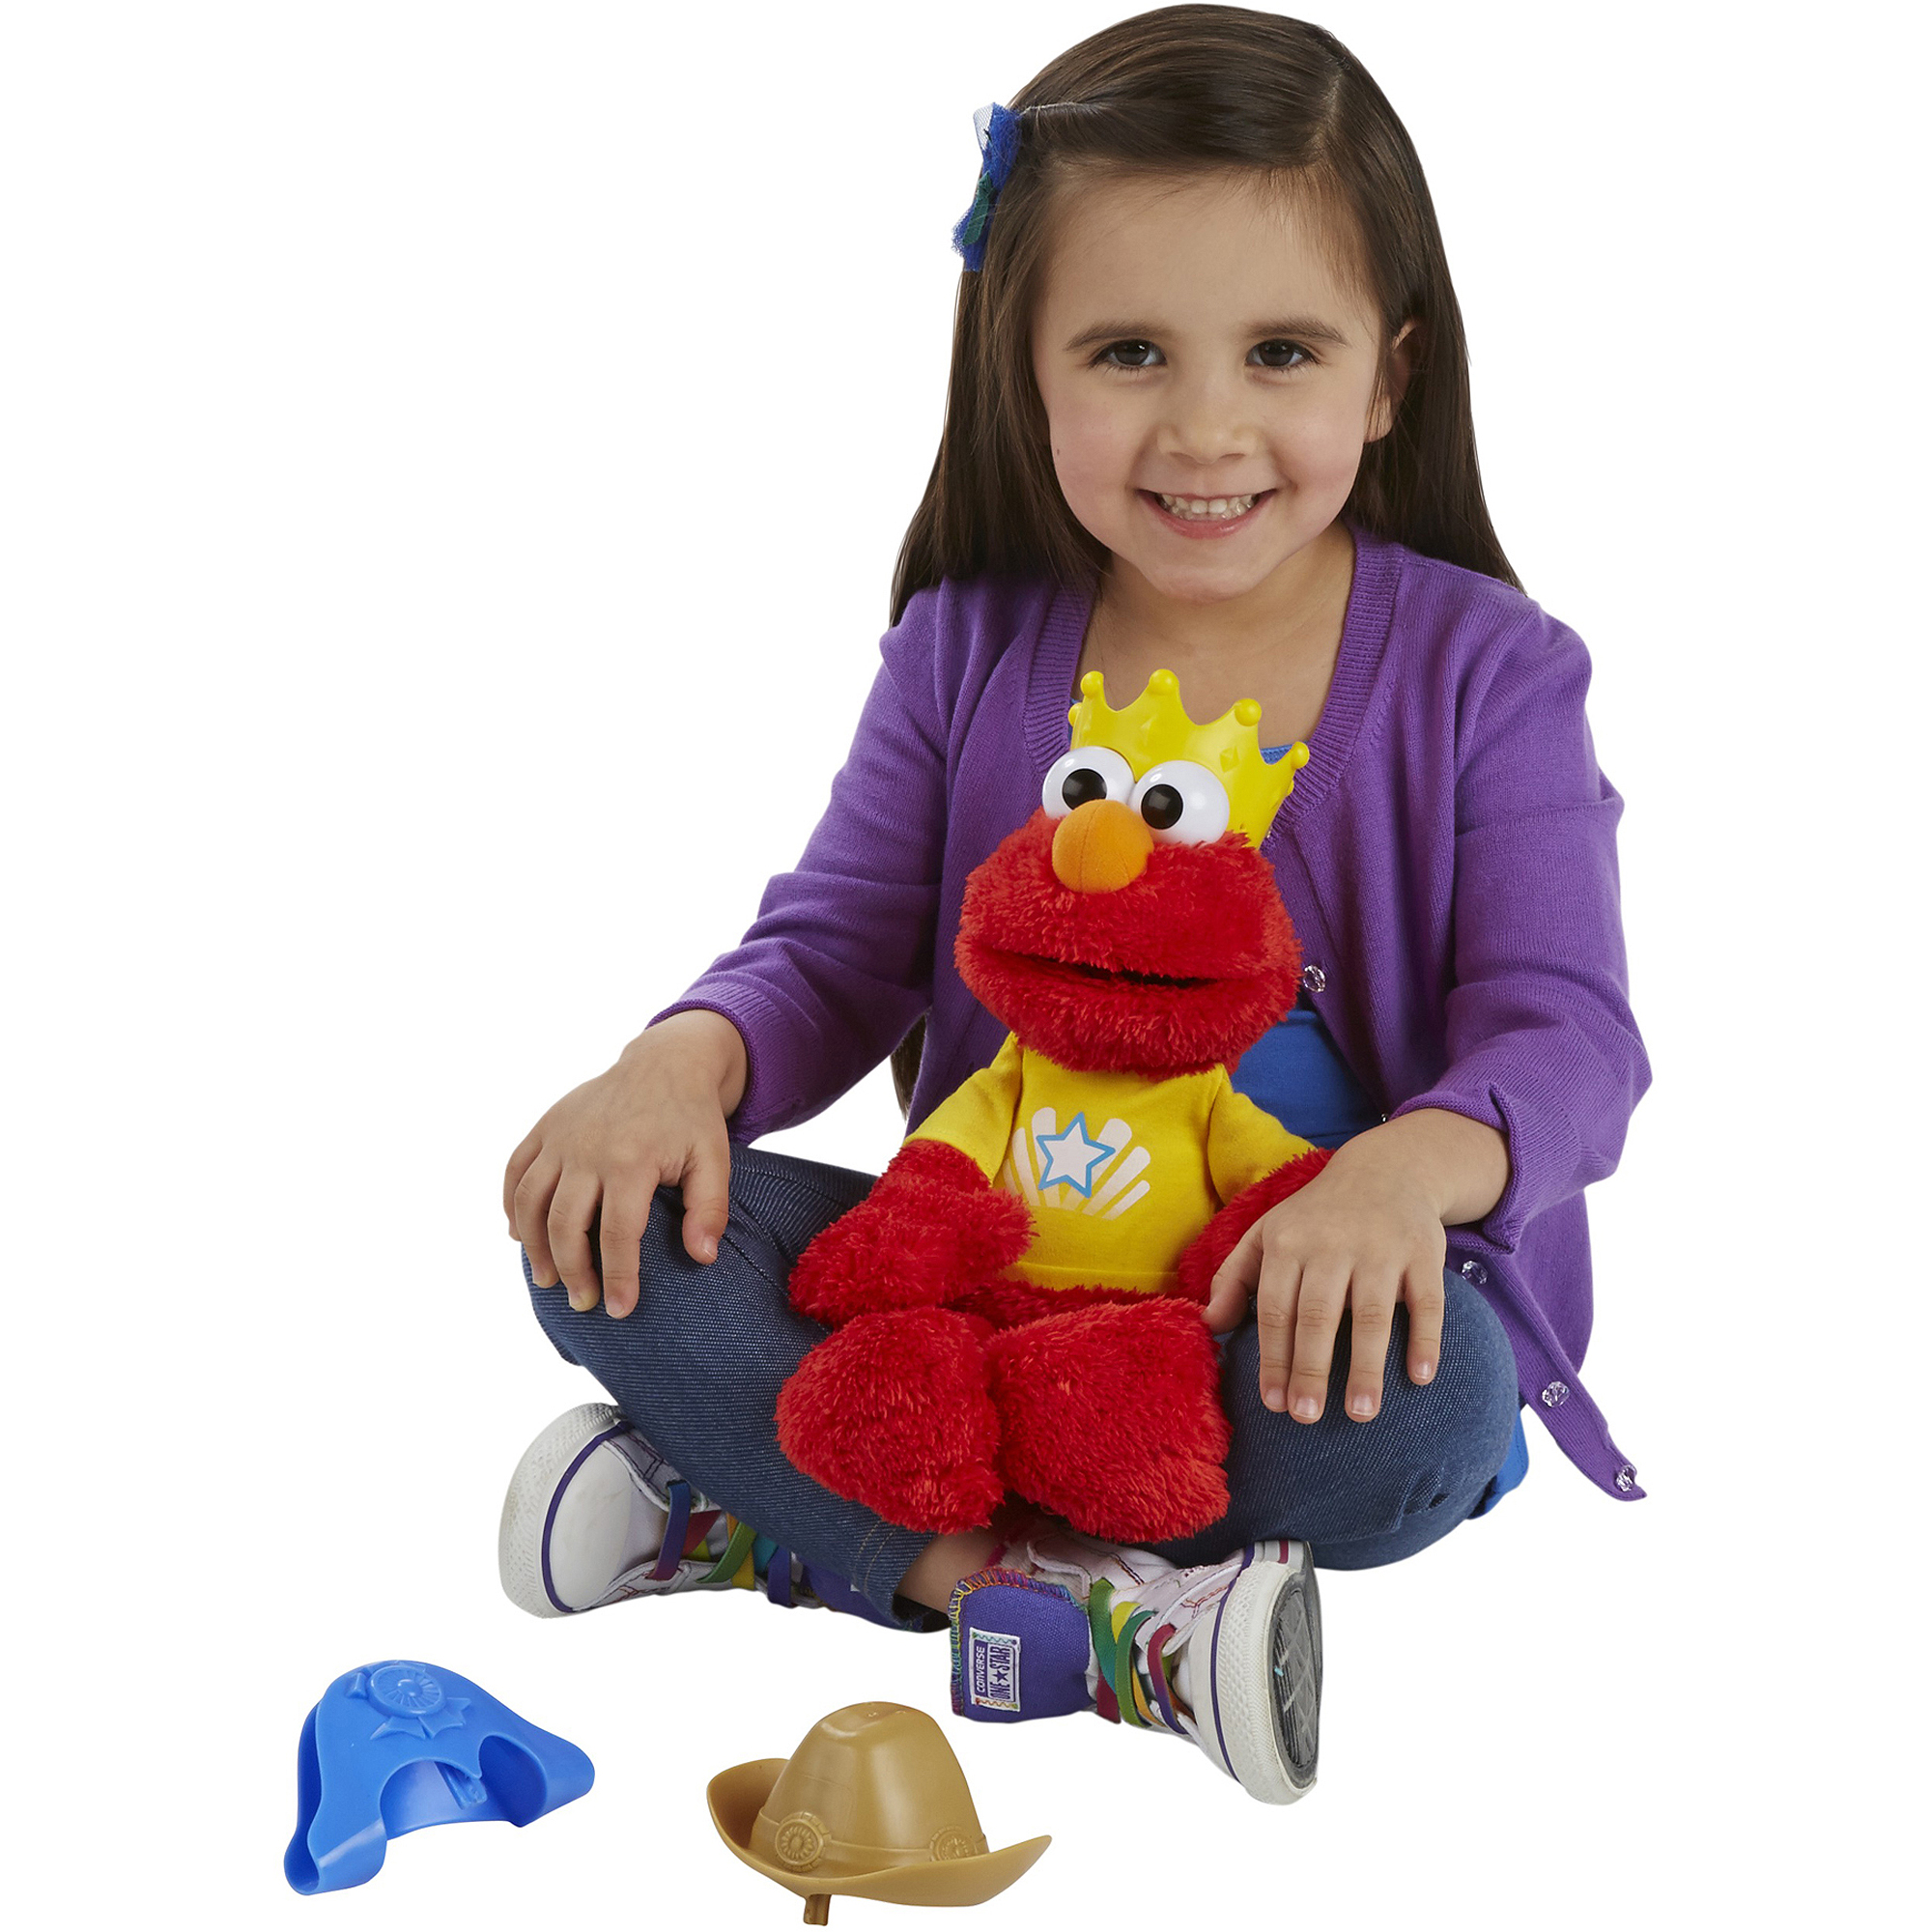 Playskool Sesame Street Let's Imagine Elmo Toy - image 3 of 12